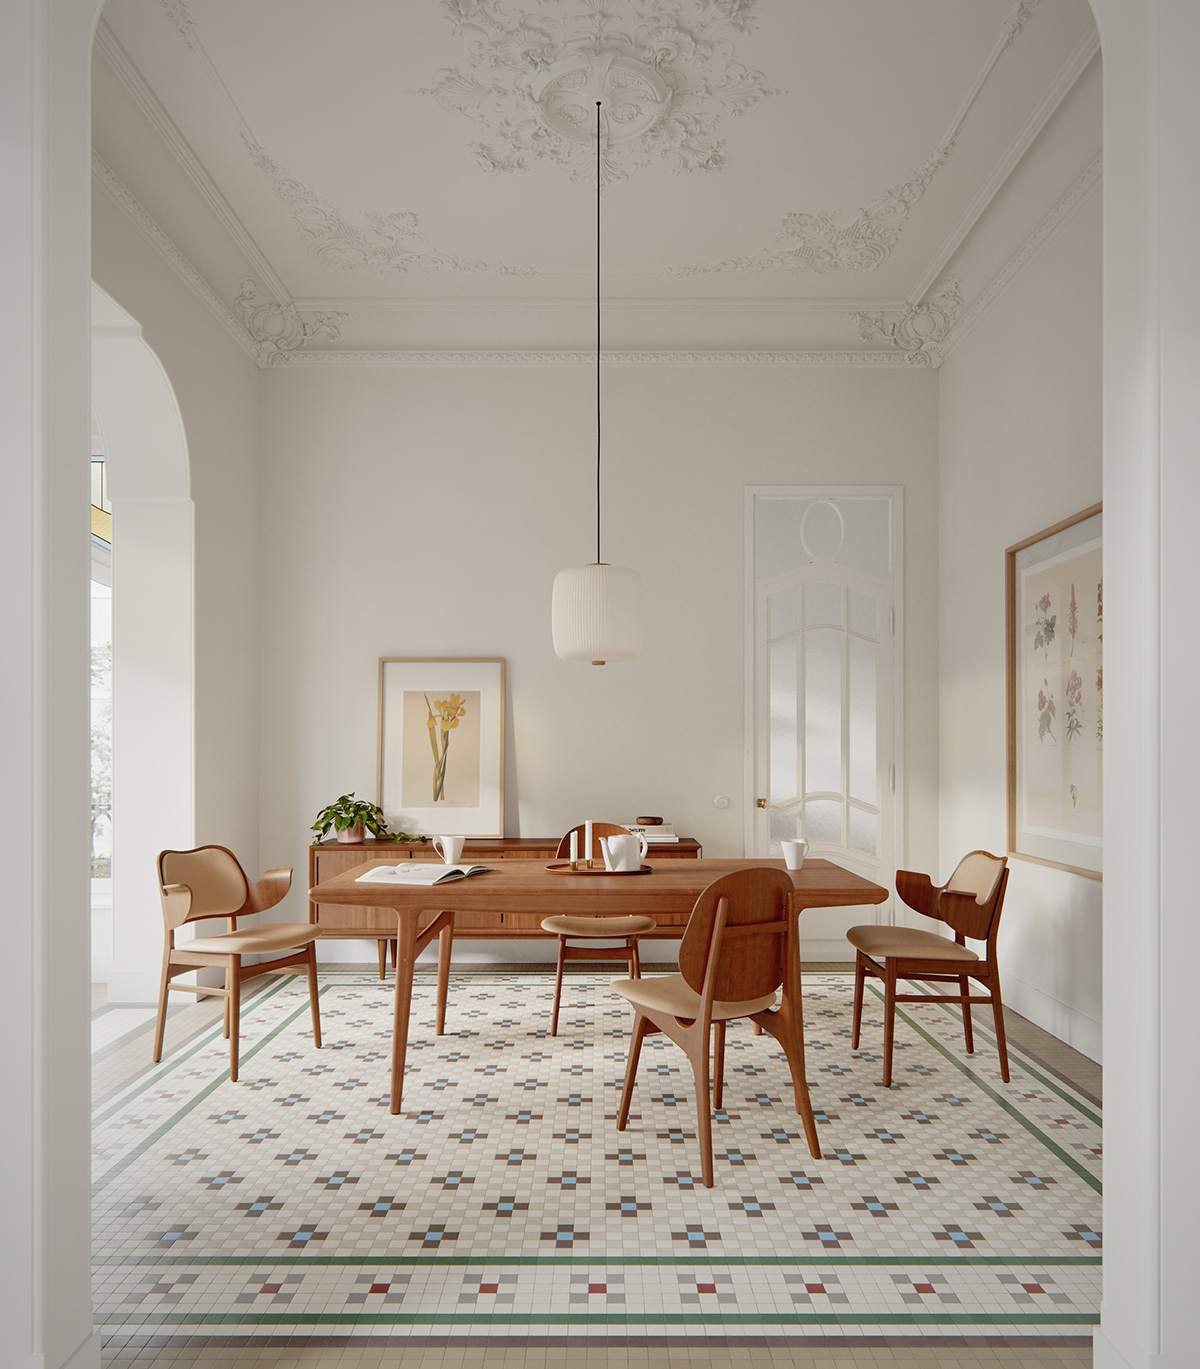 architecture archviz CGI corona render  Interior interior design  modernism vintage